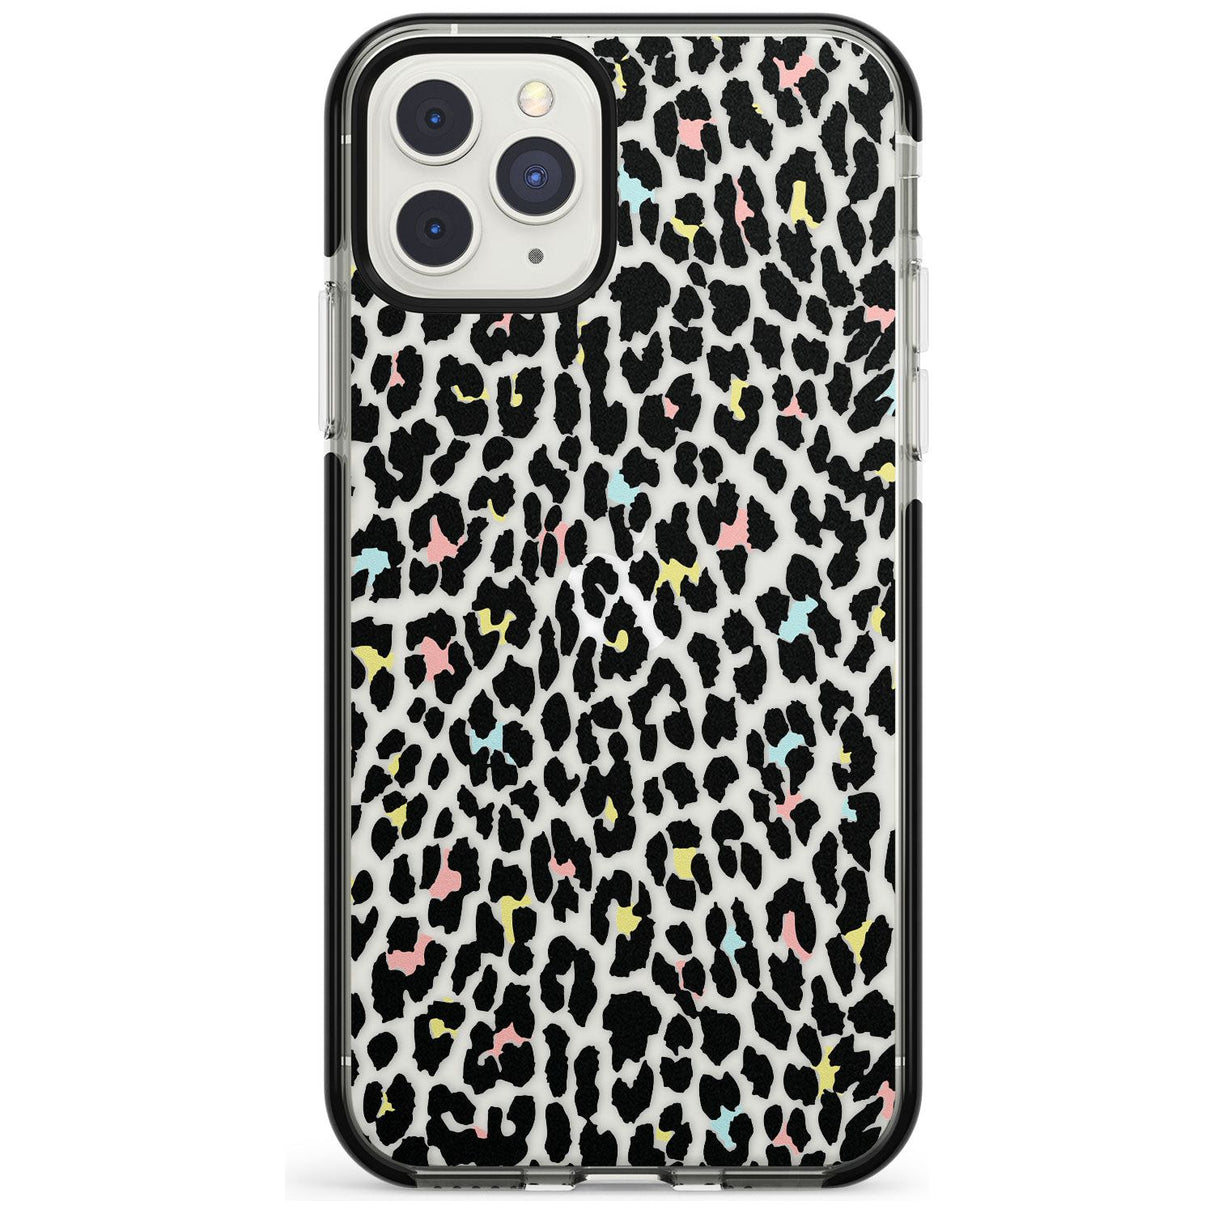 Mixed Pastels Leopard Print - Transparent Black Impact Phone Case for iPhone 11 Pro Max